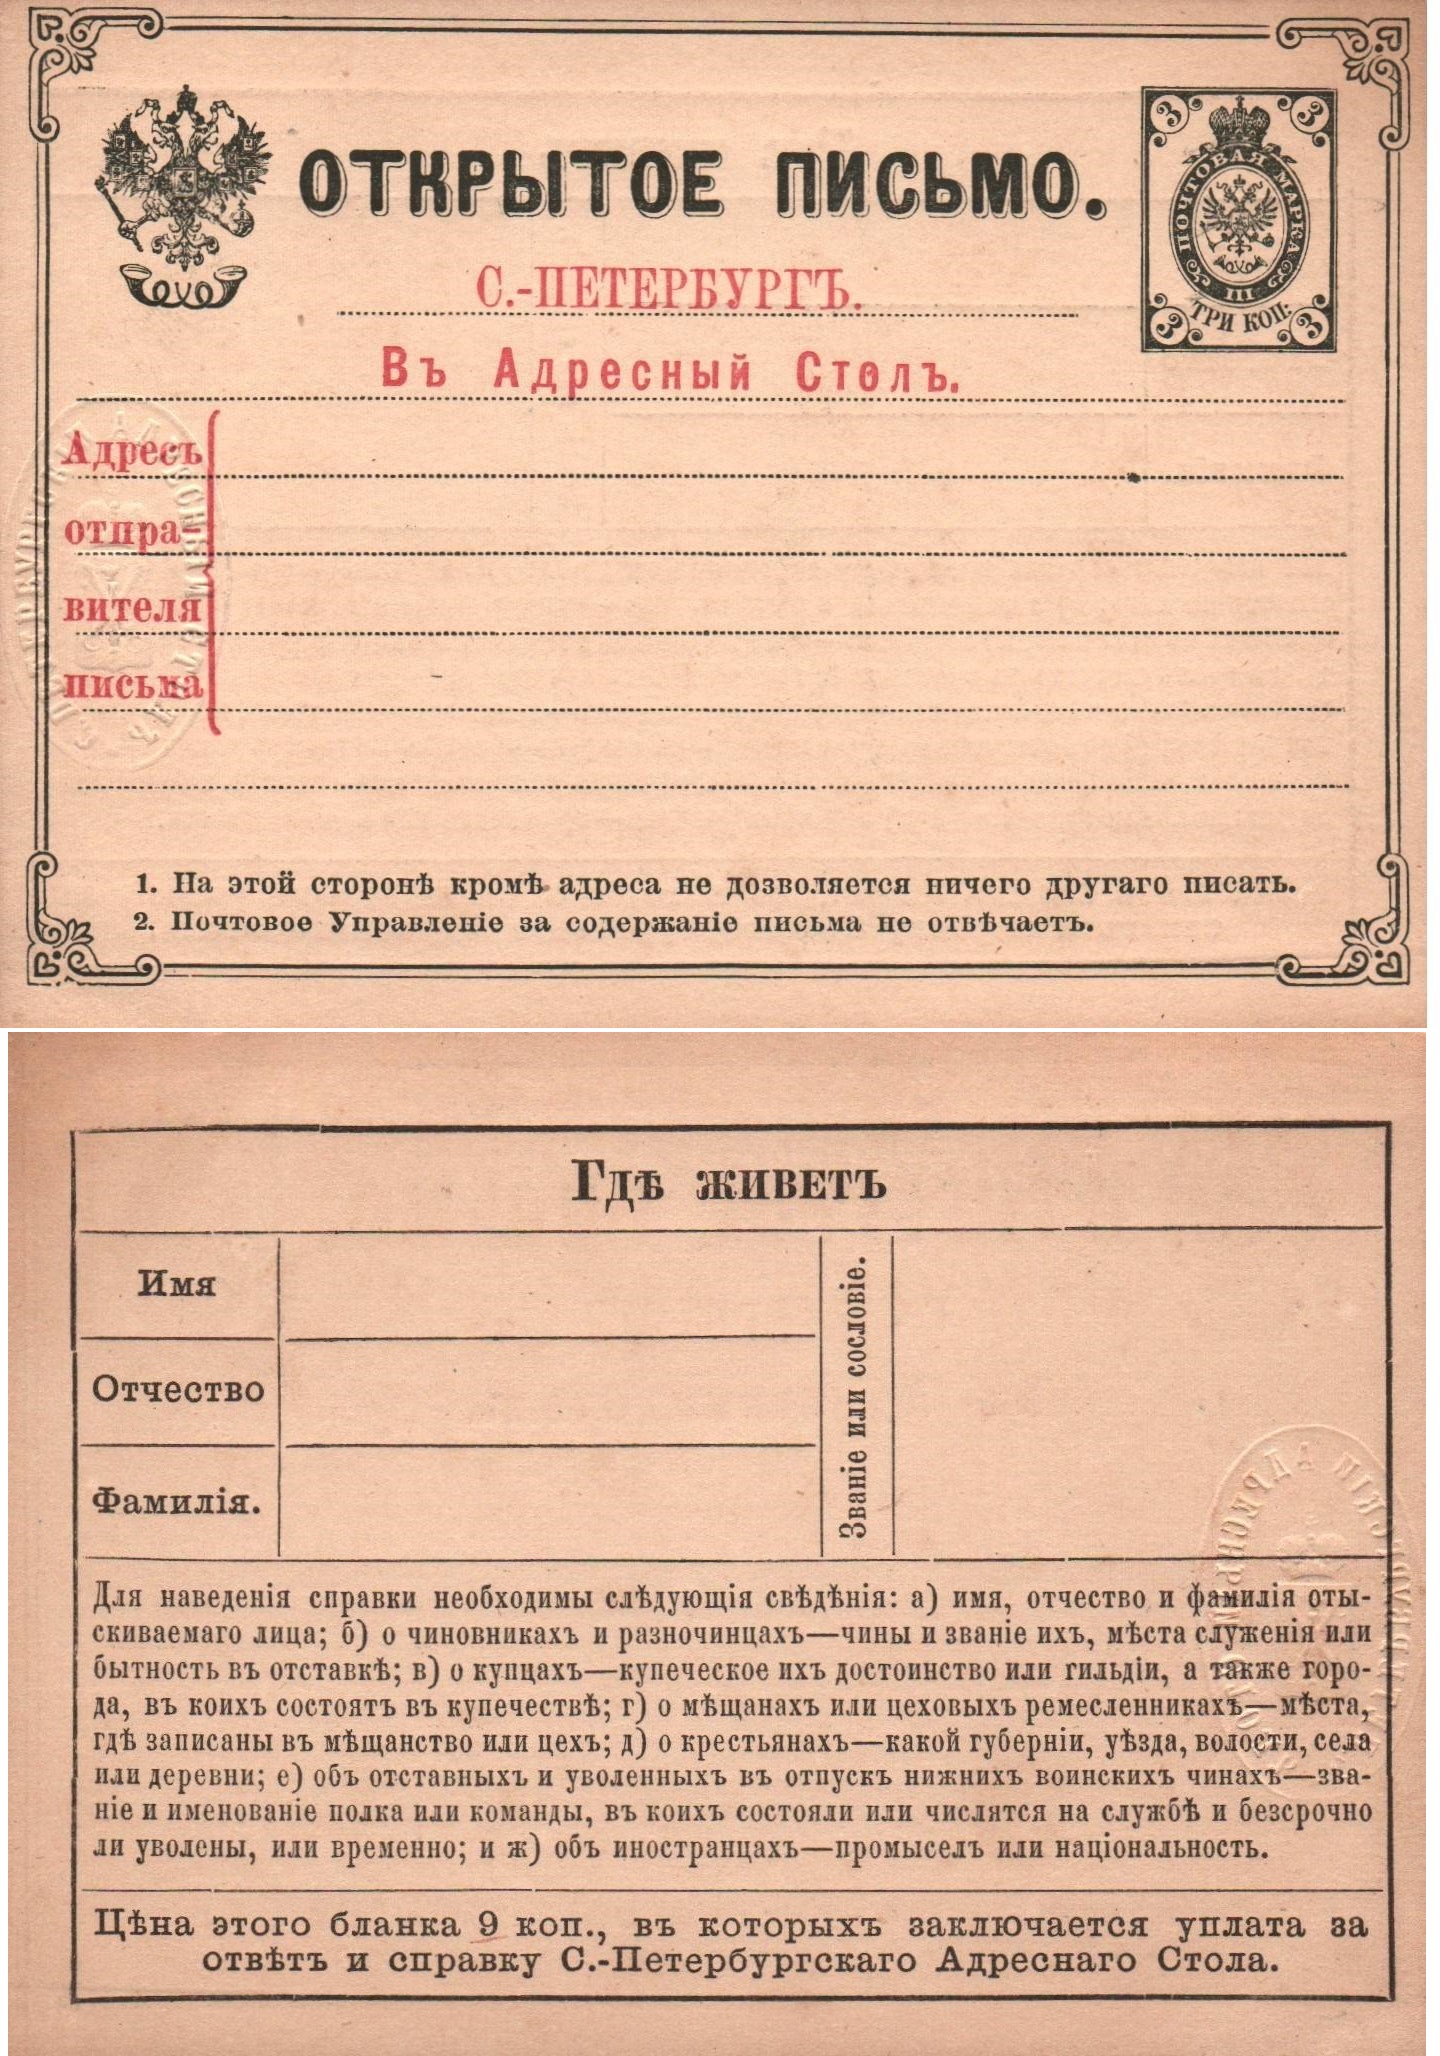 Postal Stationery - Imperial Russia Adress Request Postcard Scott 51 Michel AAK2 